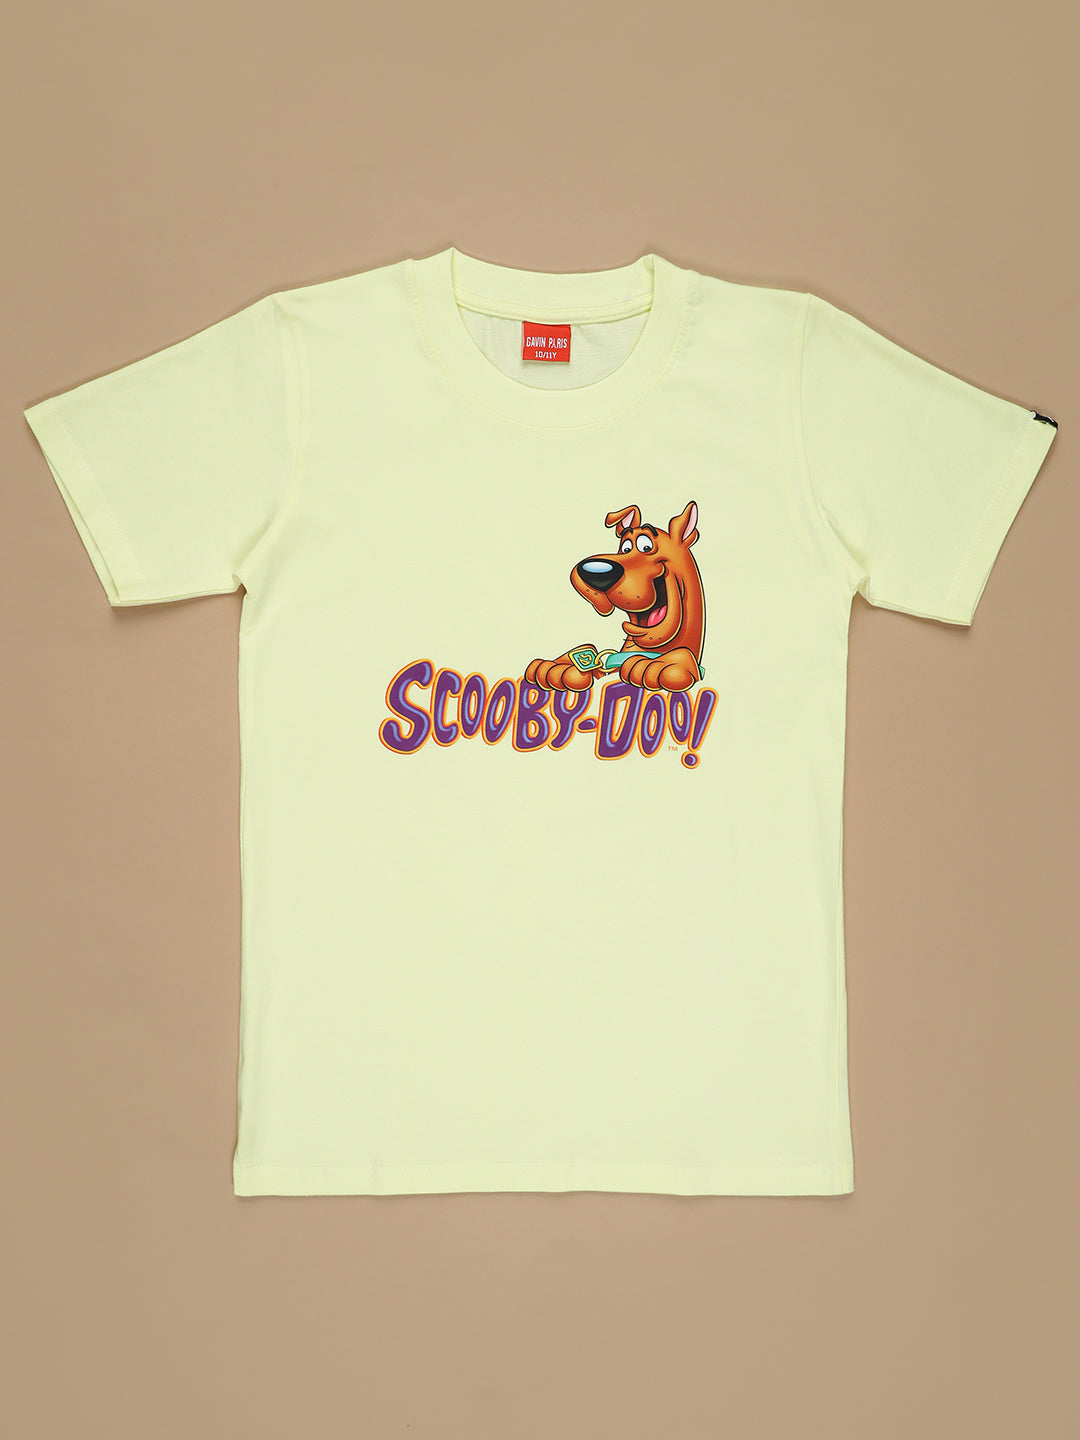 Doo T-shirts for Boys & Girls